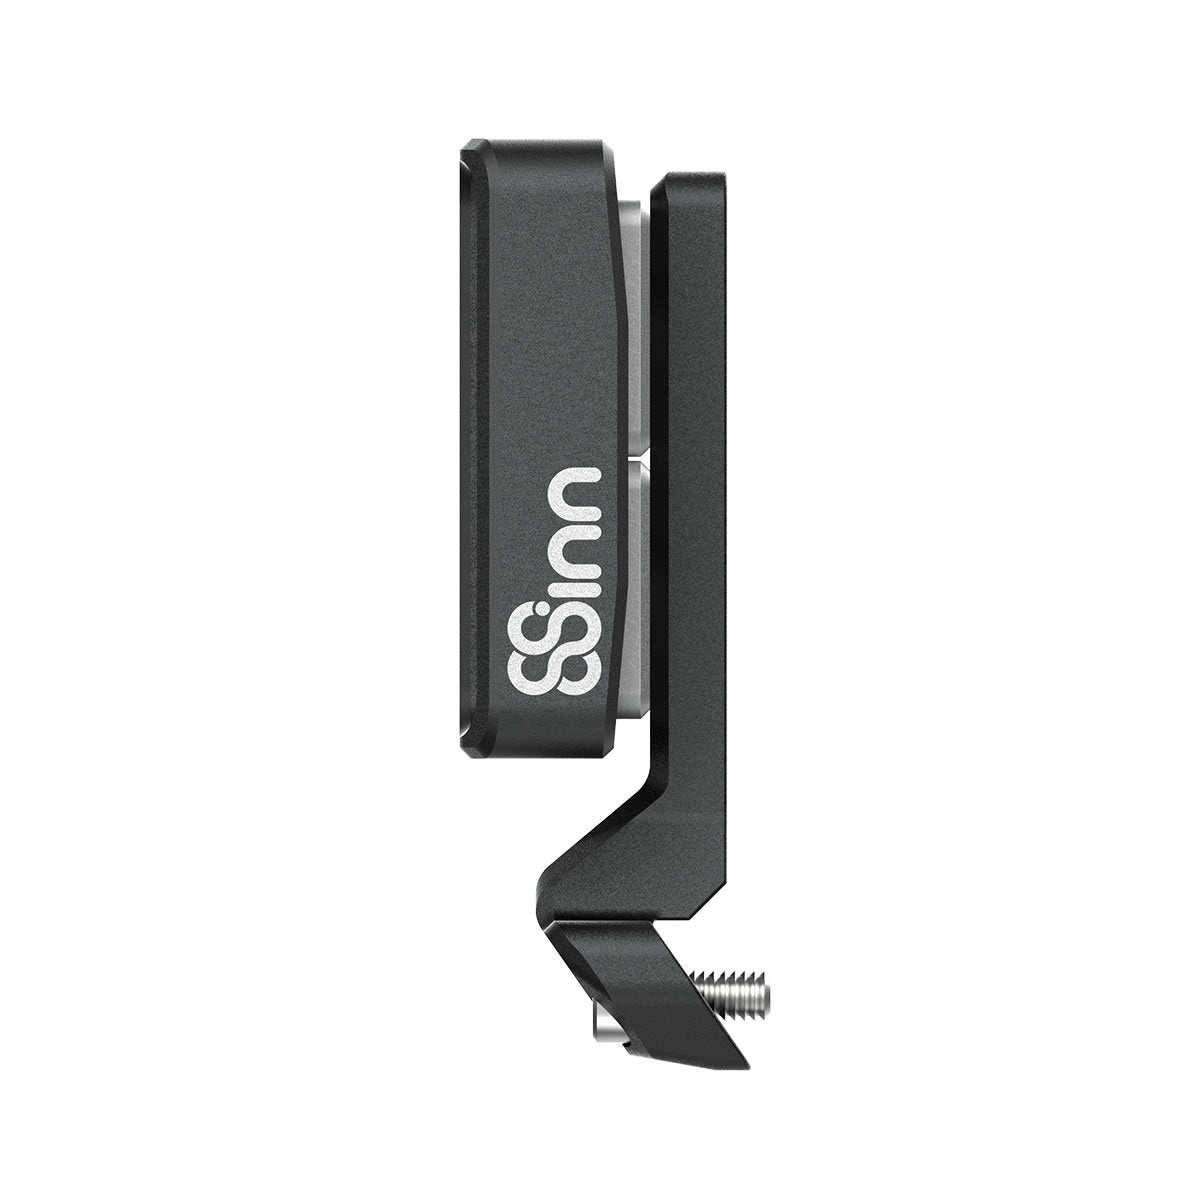 8Sinn(エイトシン) S5ケージ用HDMI/USBケーブルクランプ 8HDMICCPS5C(8-HDMICC-PS5 C)